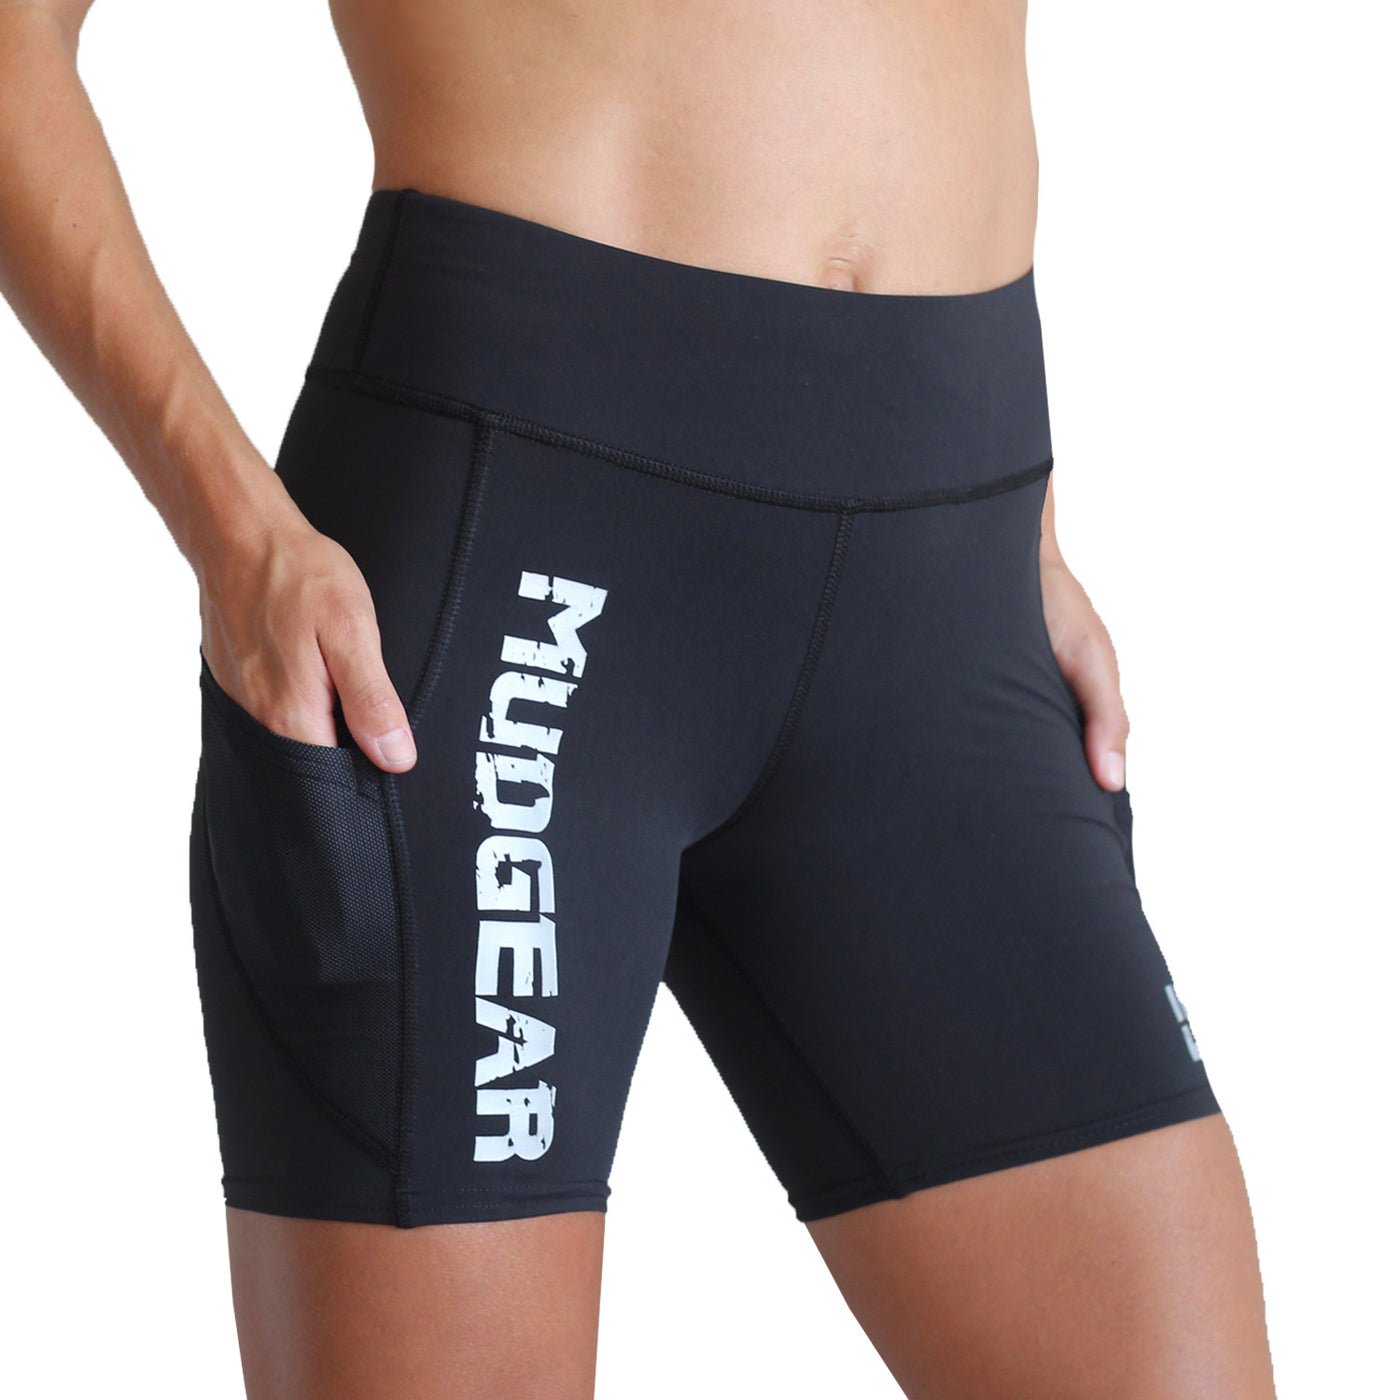 Women's Flex-Fit Compression Shorts 6-inch Inseam (Race logo